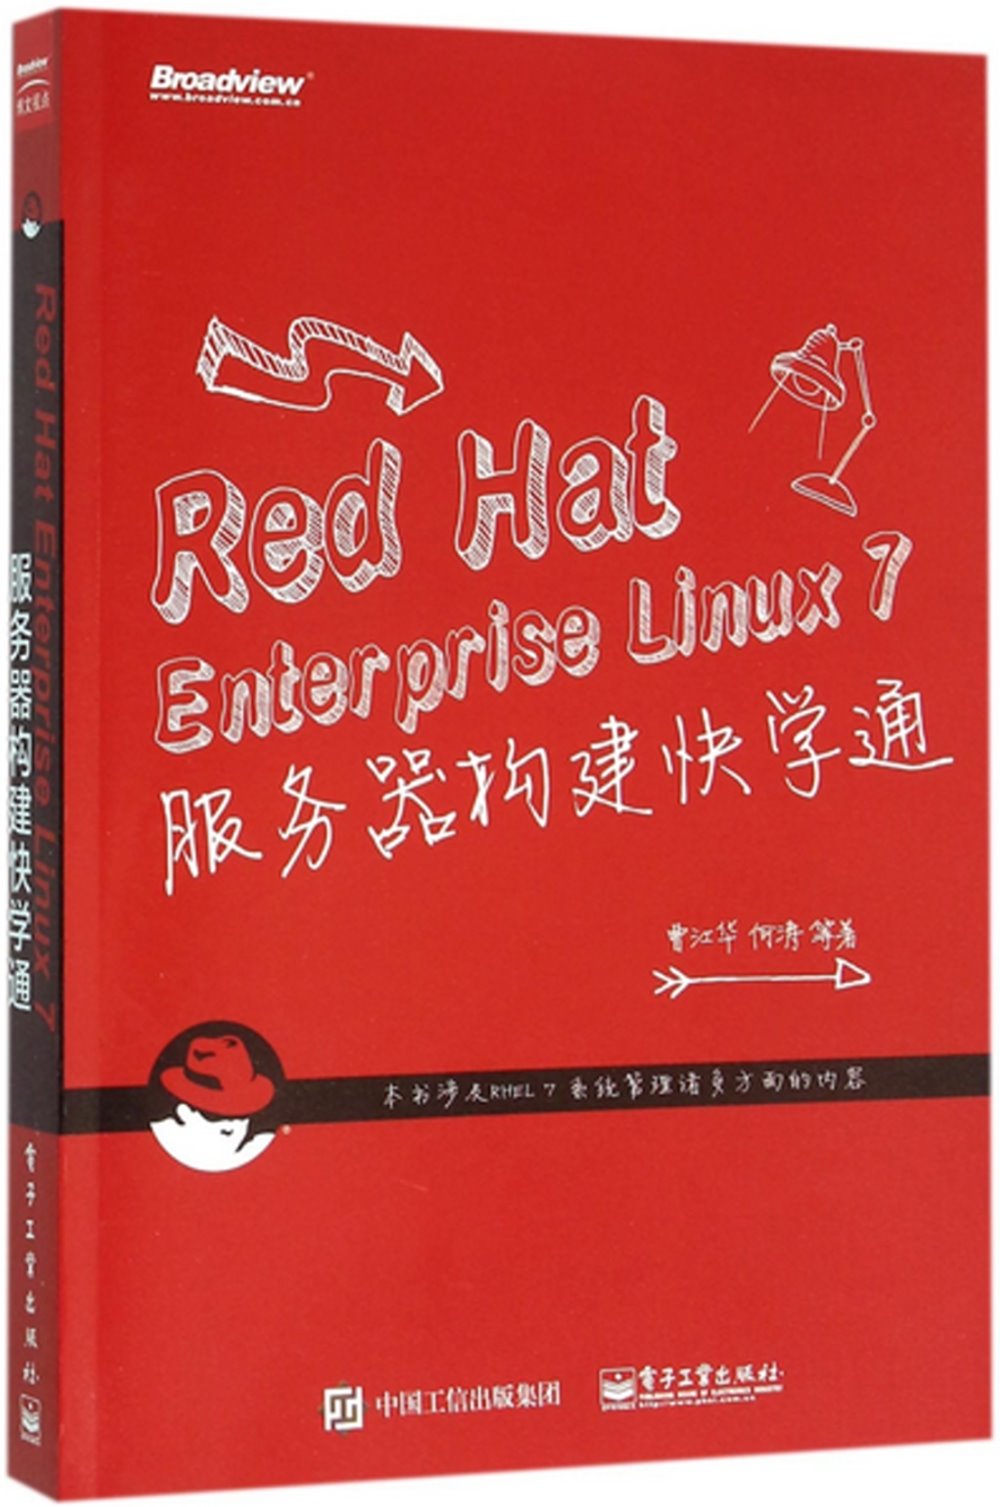 Red Hat Enterprise Linux 7 服務器構建快學通